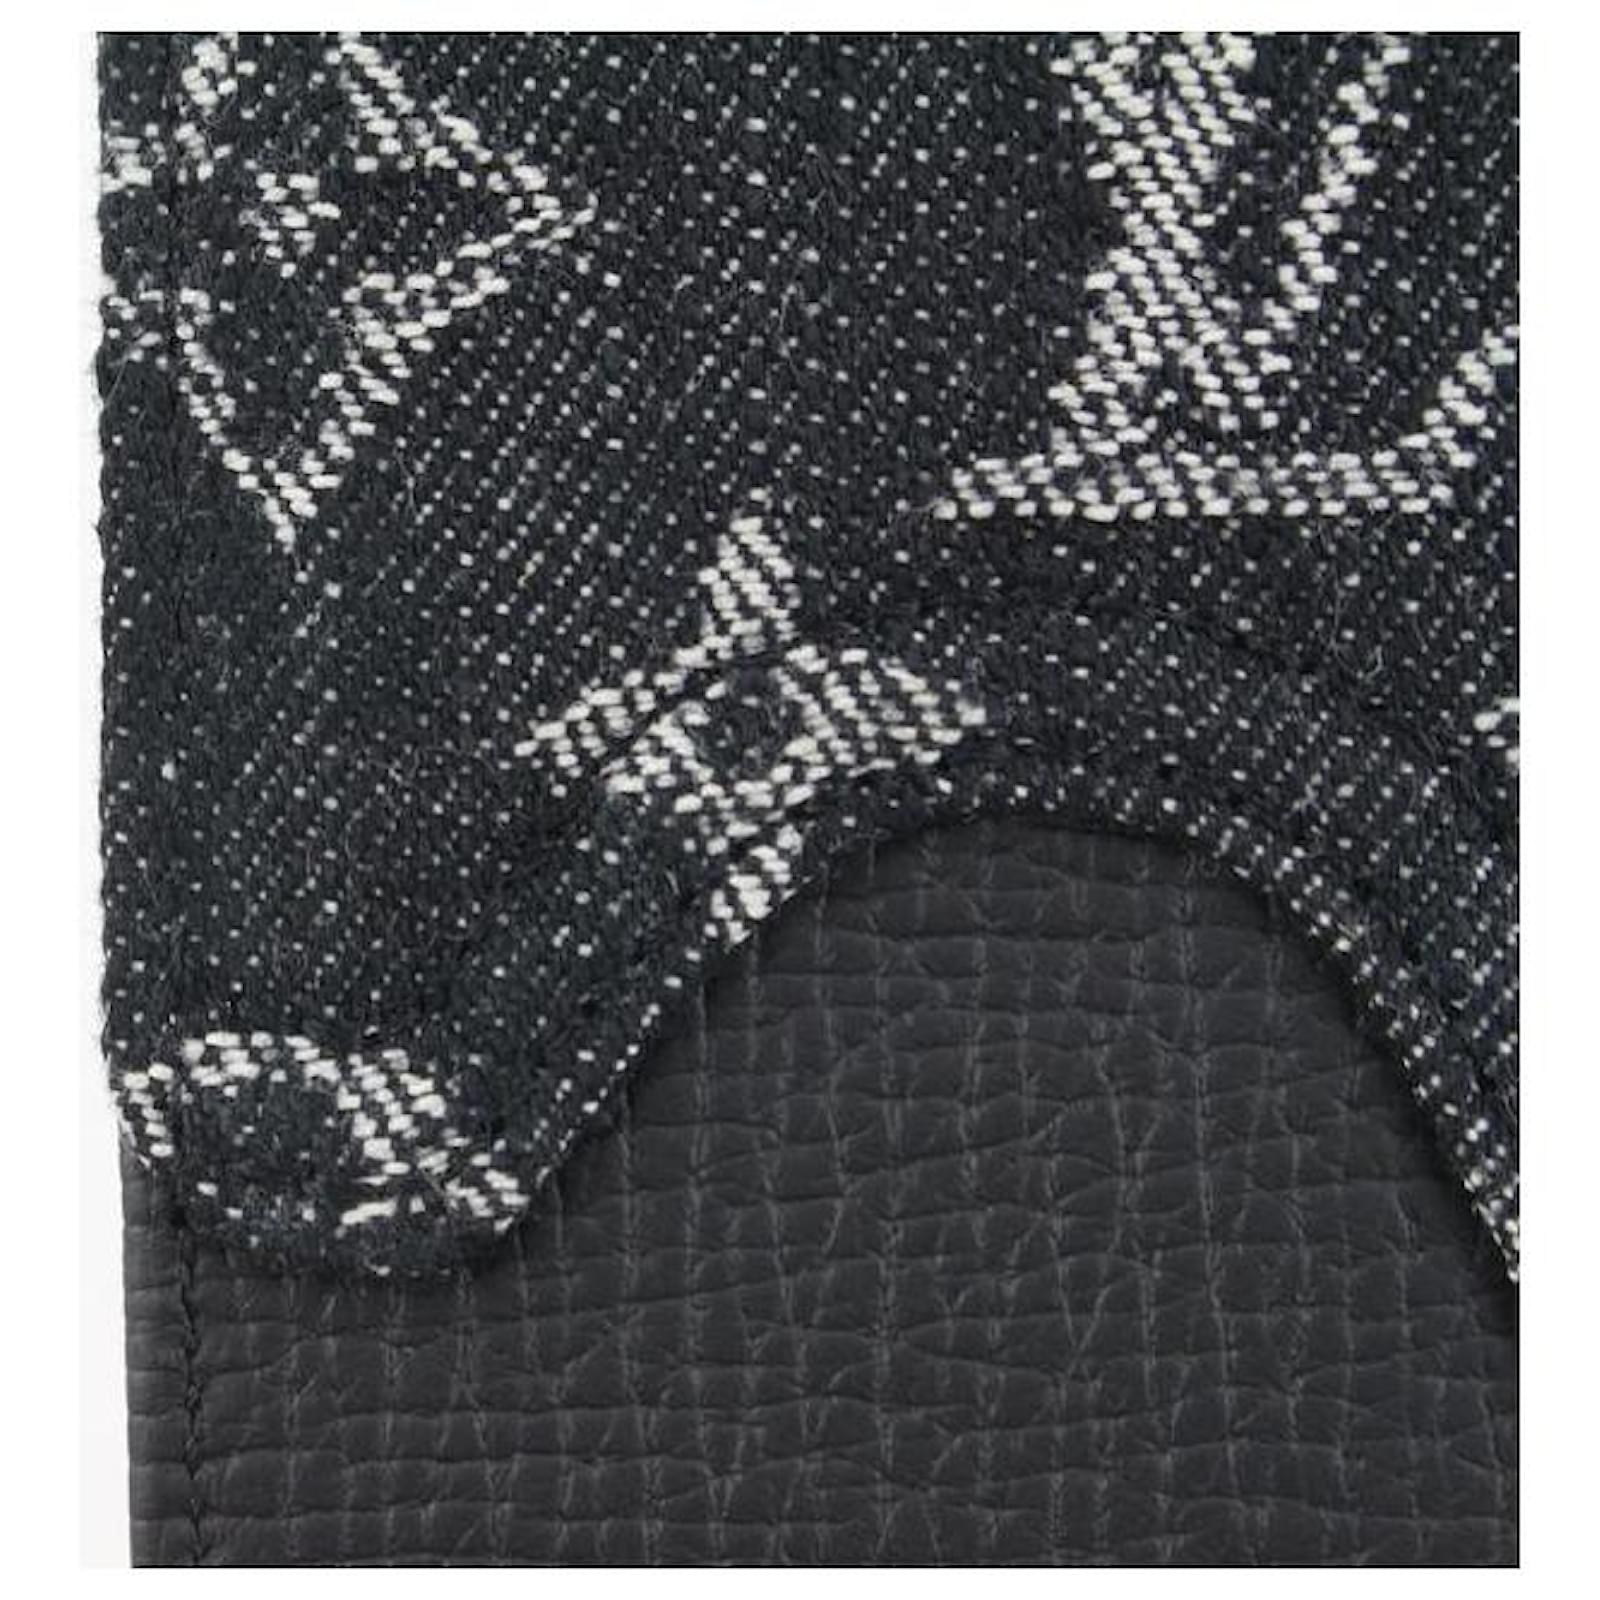 Louis Vuitton x Nigo Pocket Organizer Monogram Black